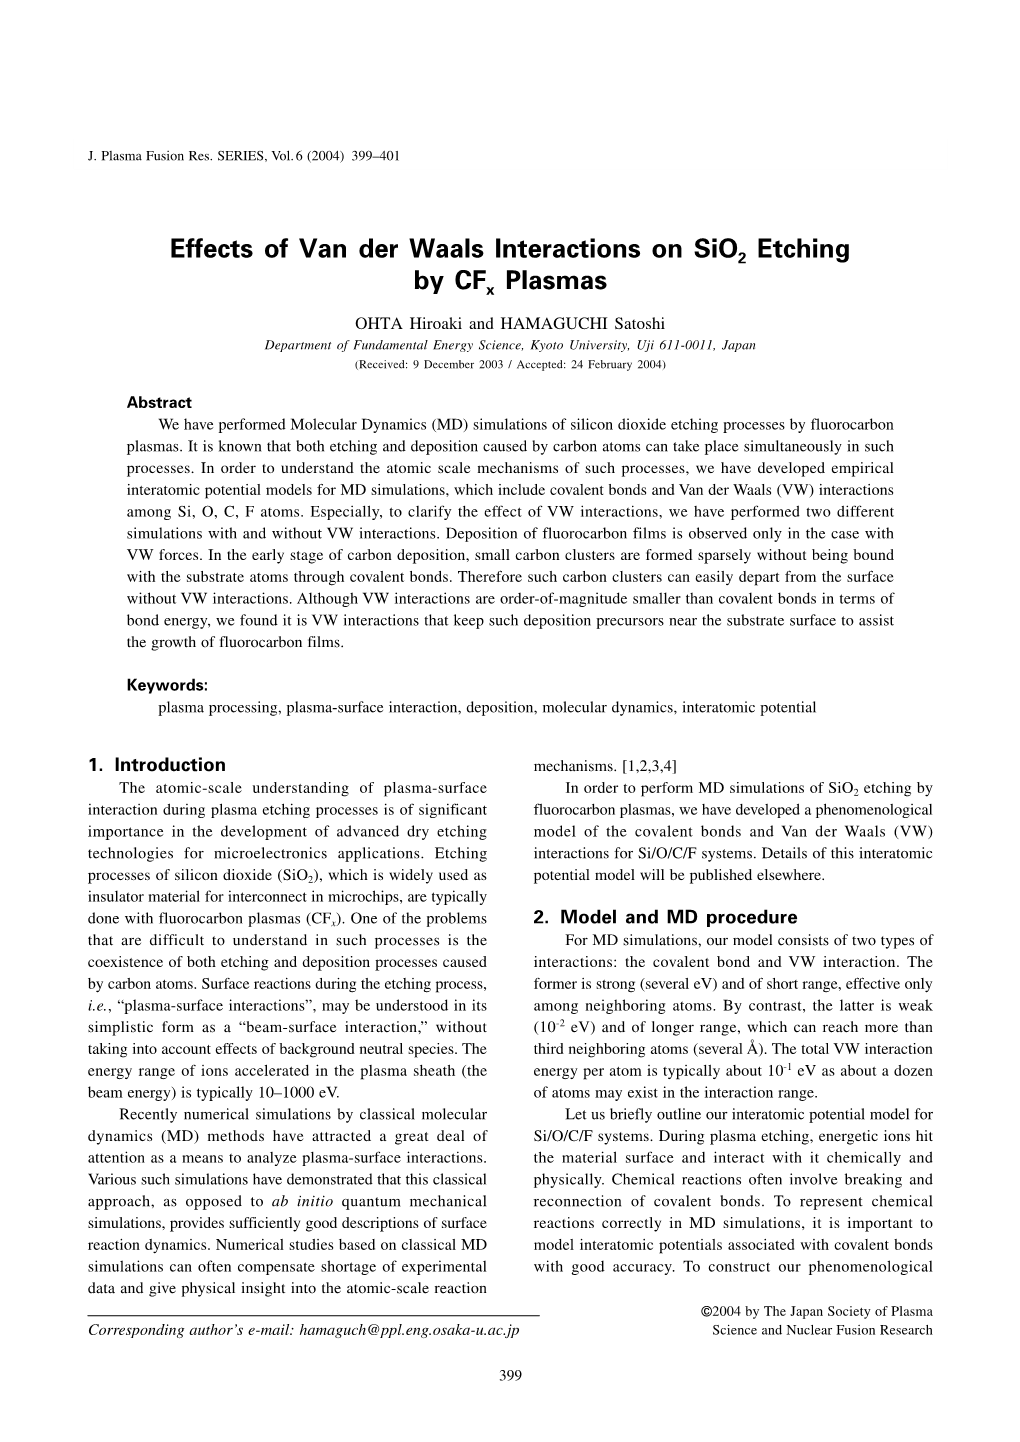 Effects of Van Der Waals Interactions on Sio2 Etching by Cfx Plasmas